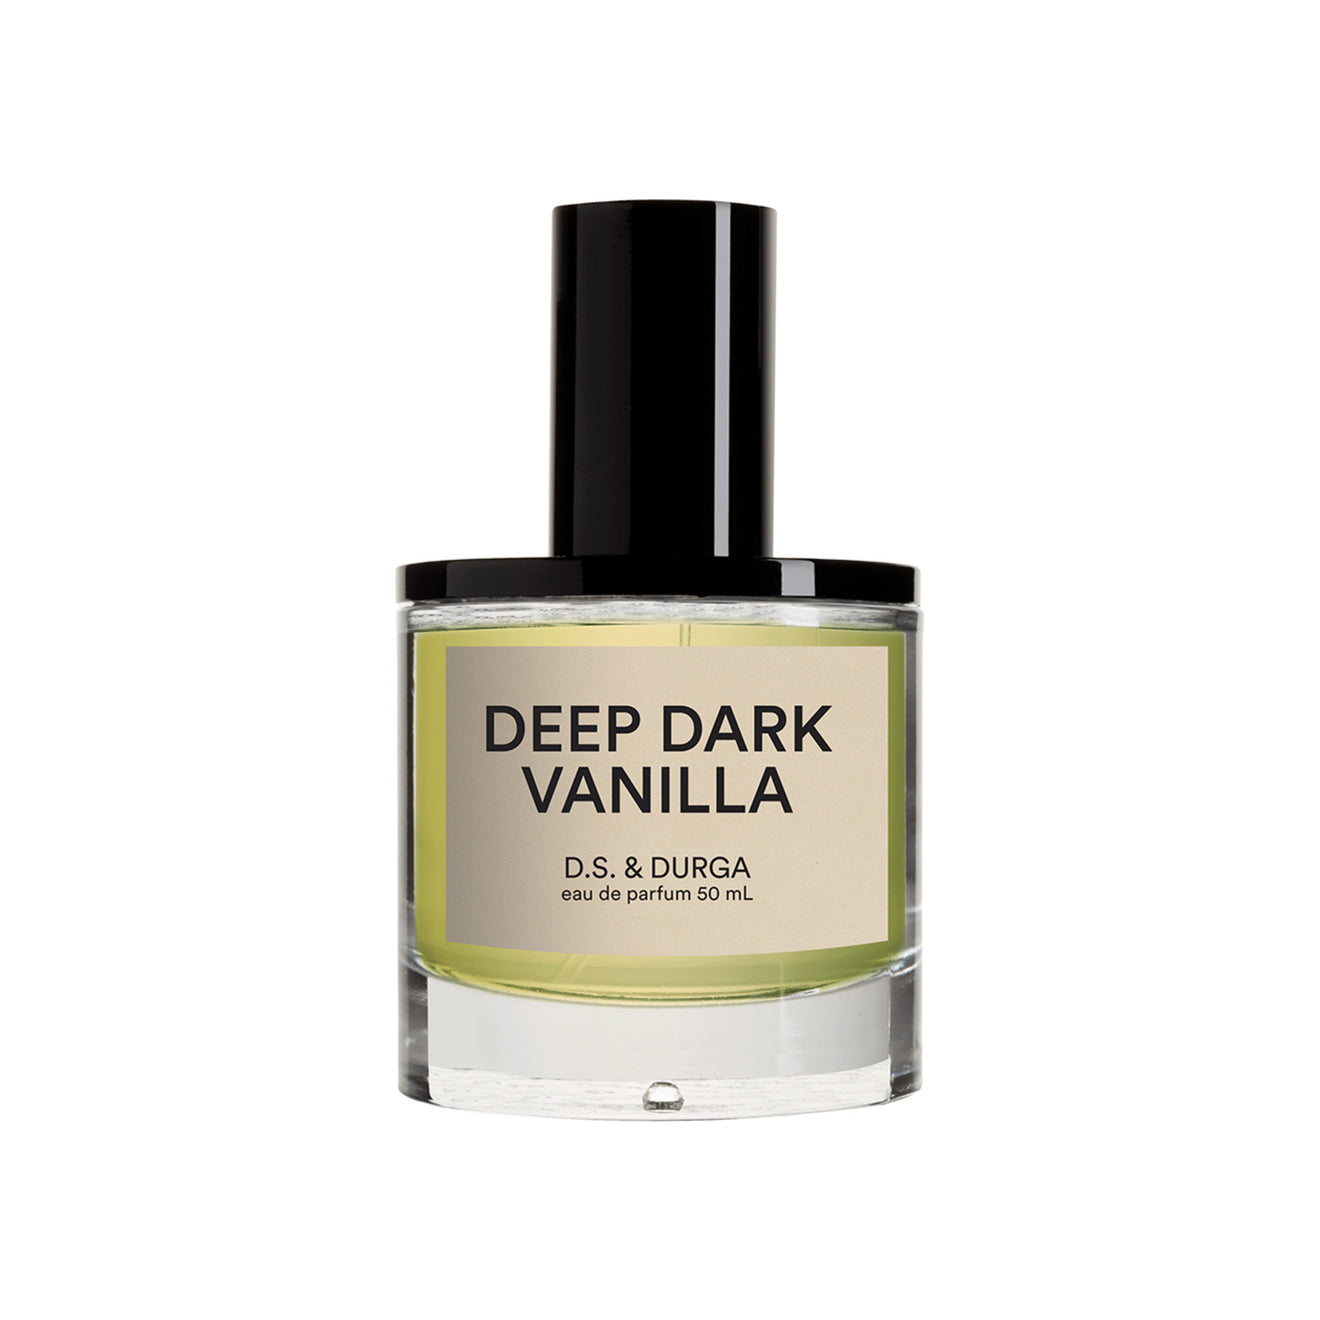 D.S. & Durga Deep Dark Vanilla Eau de Parfum main image.